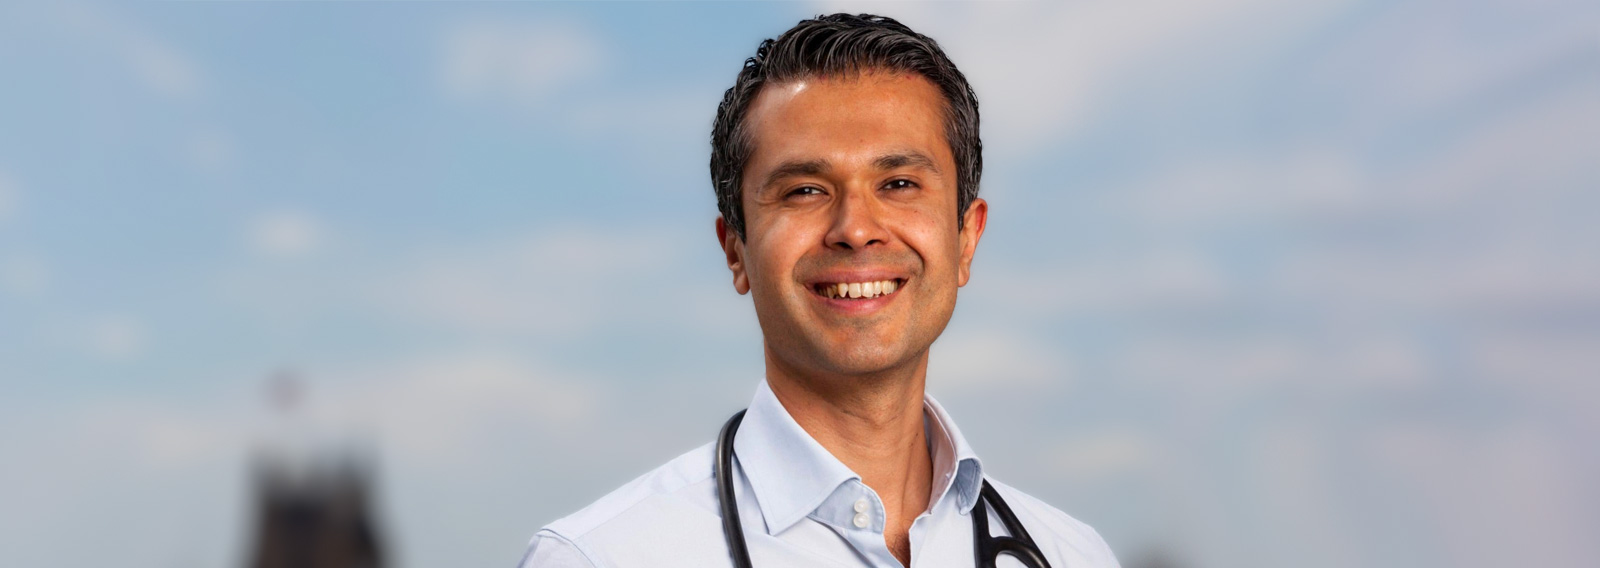 Curing the Corruption of Medicine: Dr Aseem Malhotra’s Australian Tour